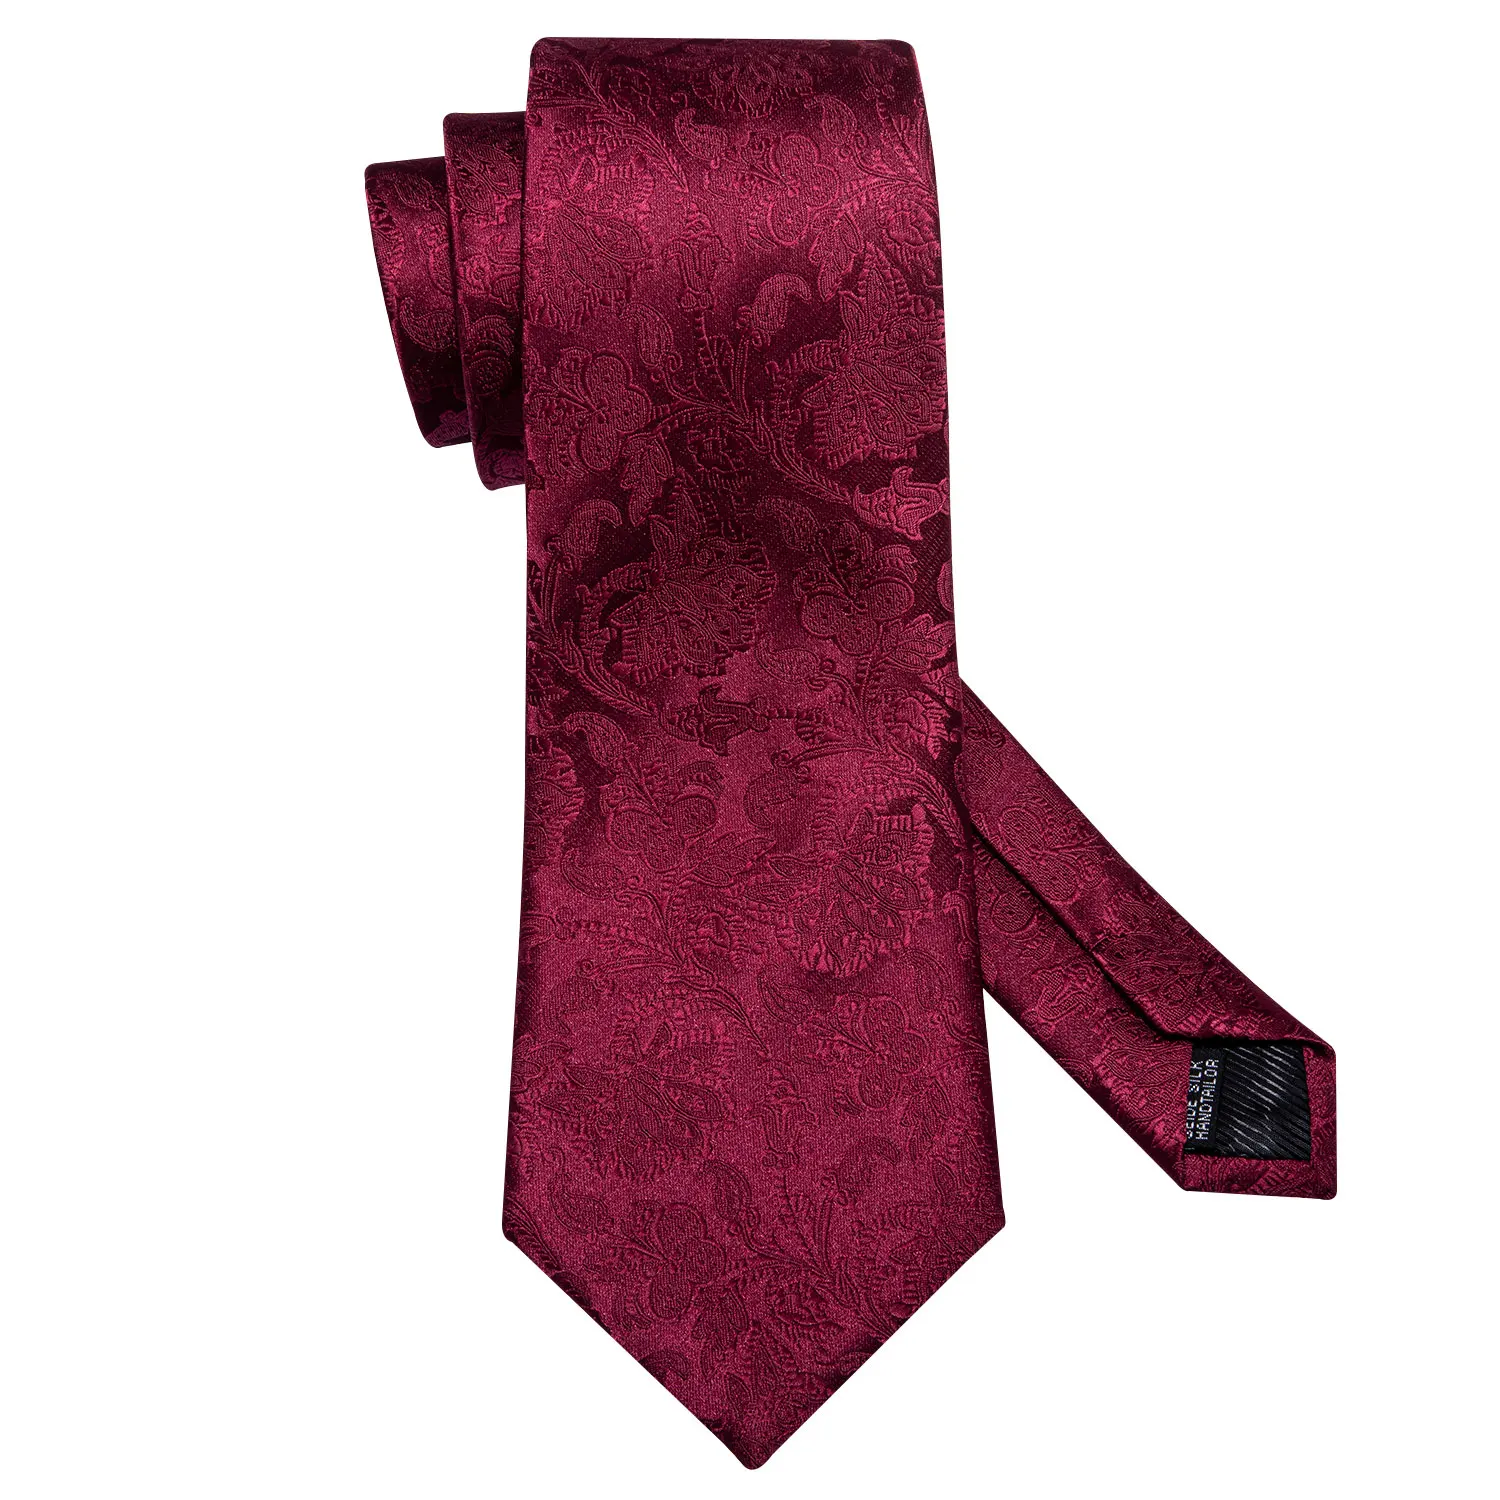 Mens Wedding Tie Red Paisley Solid Silk Neck Ties For Men Gravat Handkerchief Cufflink Brooch Set Barry.Wang Designer FA-5509 images - 6